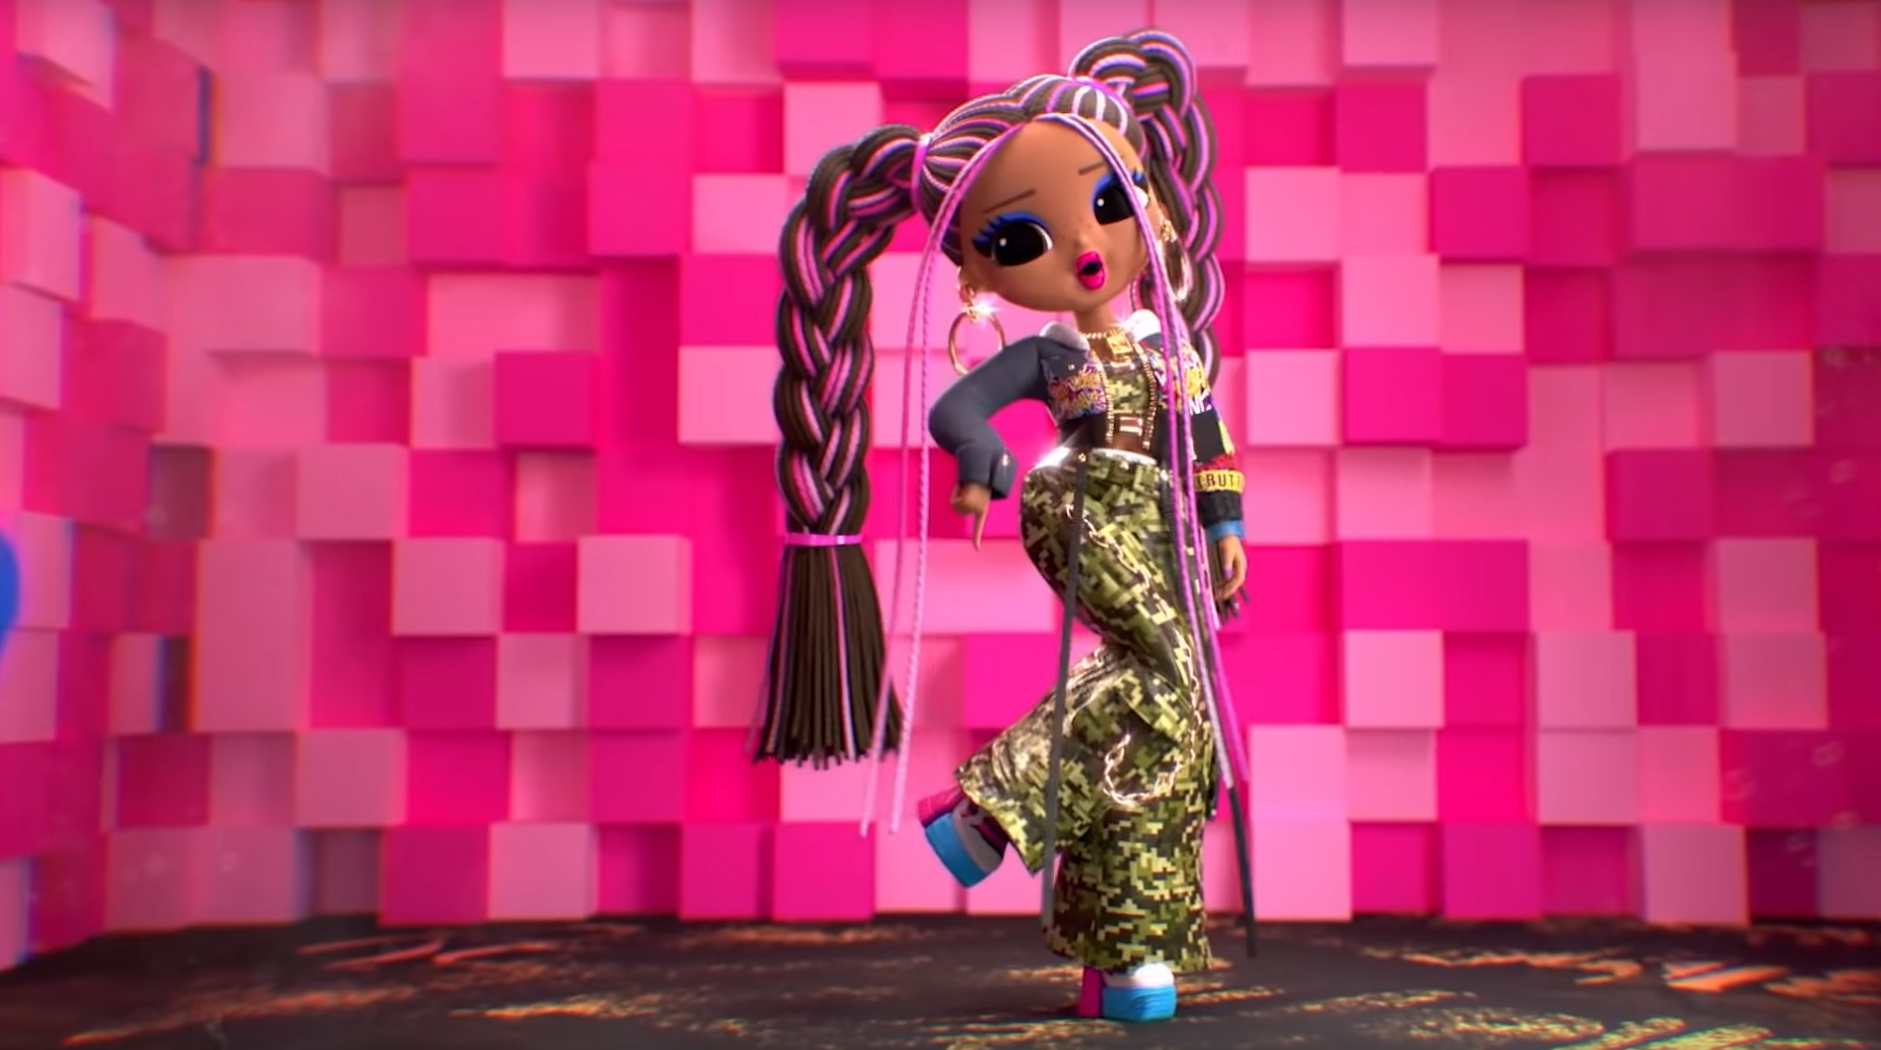 LOL OMG Remix dolls – Kitty K, Lonestar, Pop B.B., Honeylicious